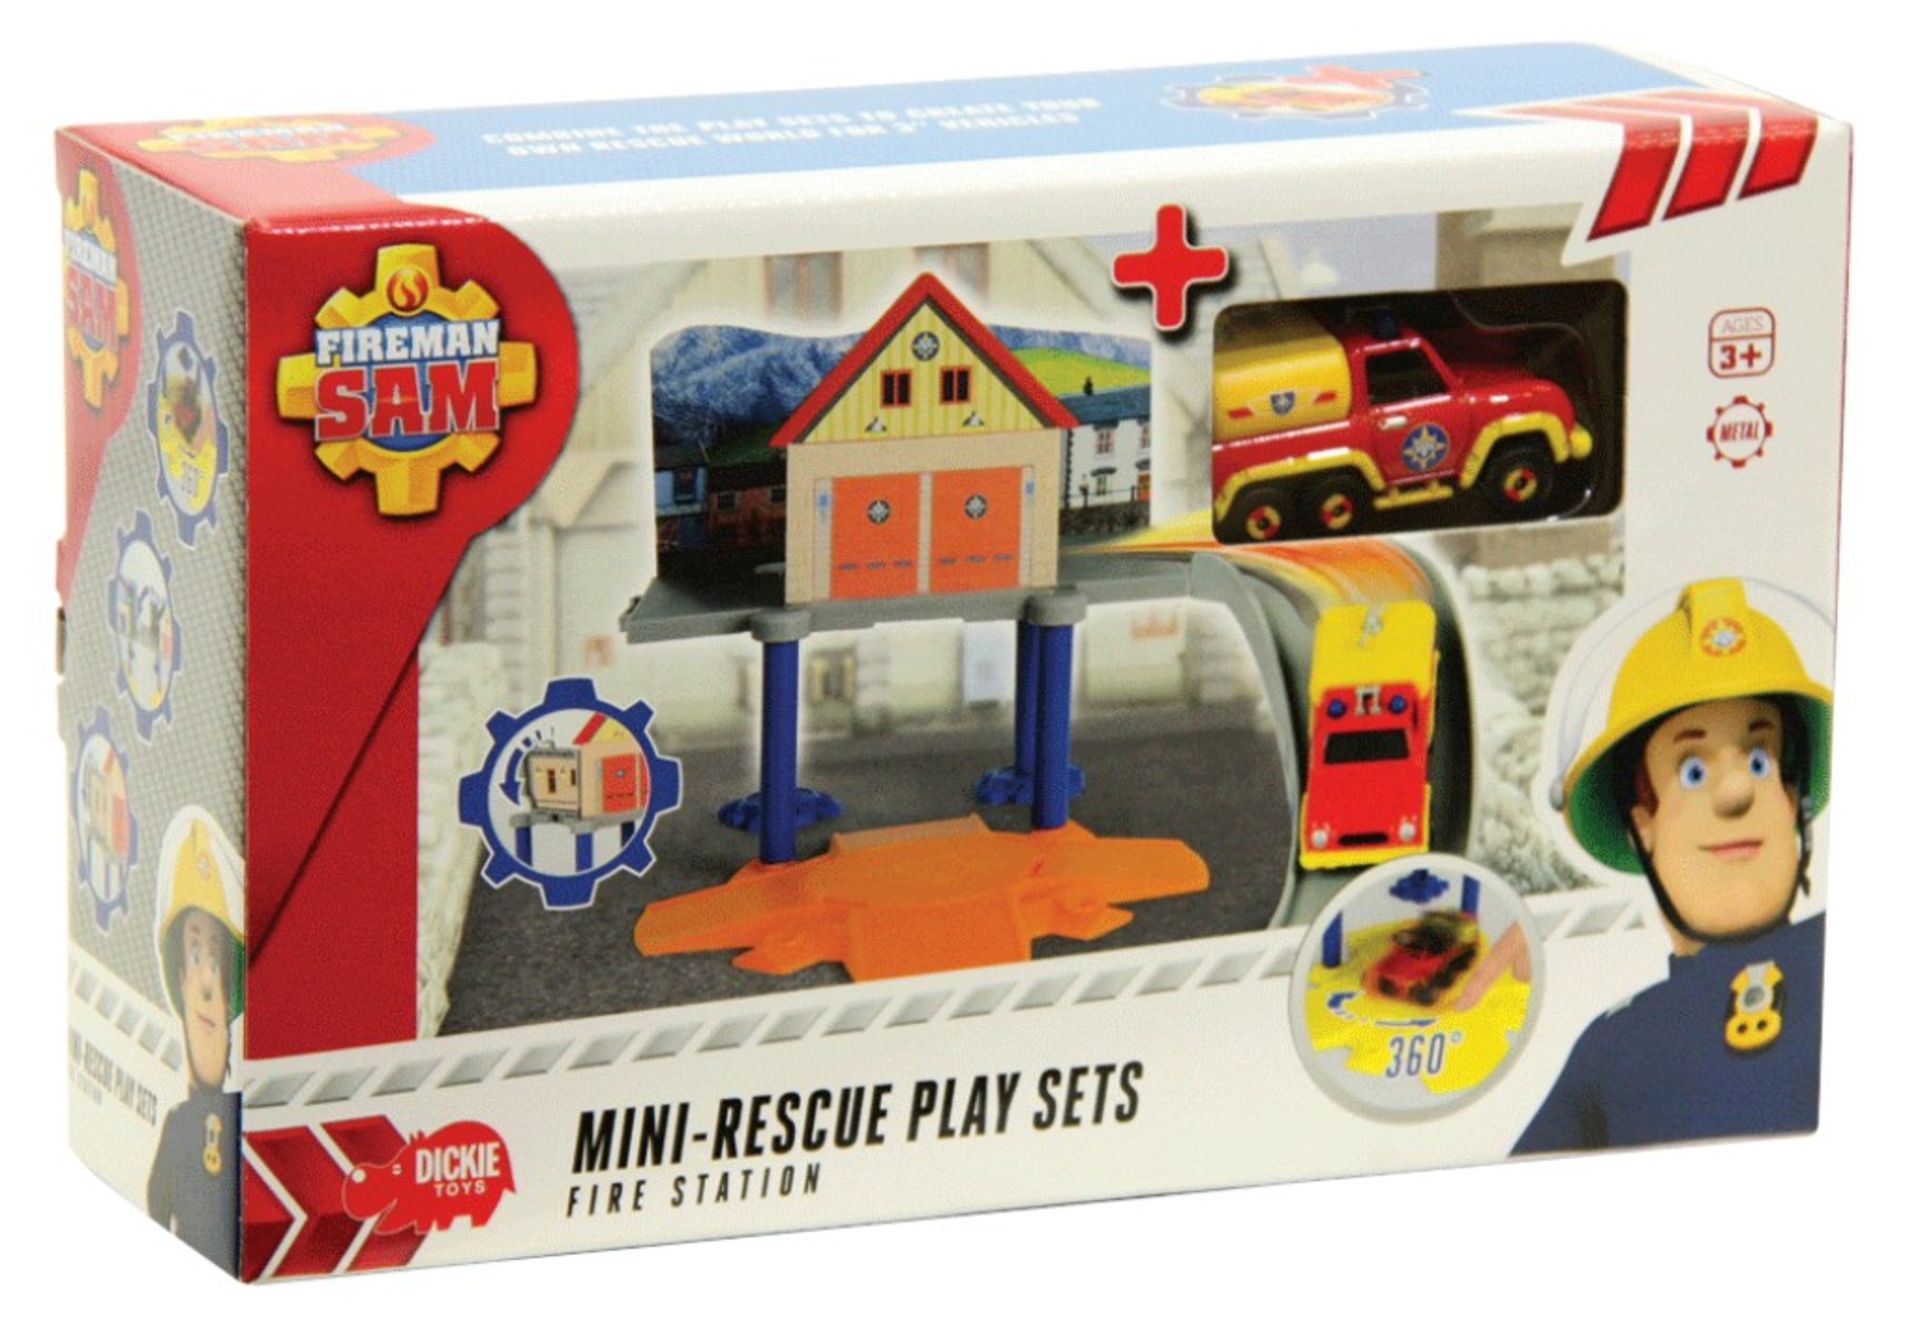 V Brand New Fireman Sam Mini-Rescue Fire Station Boat House Playset ISP - £14.99 Amazon X 2 YOUR BID